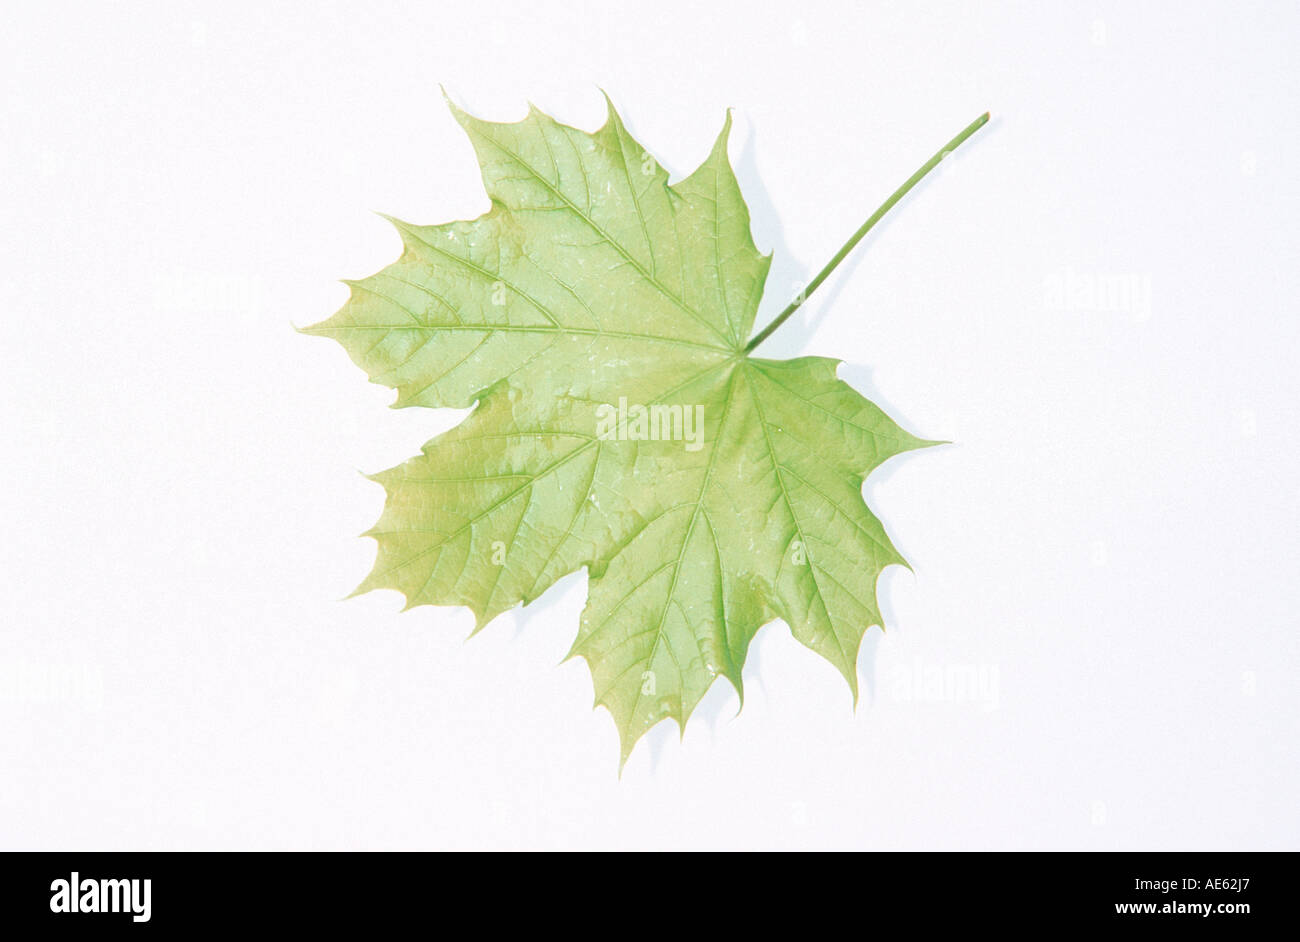 Norway Maple leaf (Acer platanoides) Stock Photo